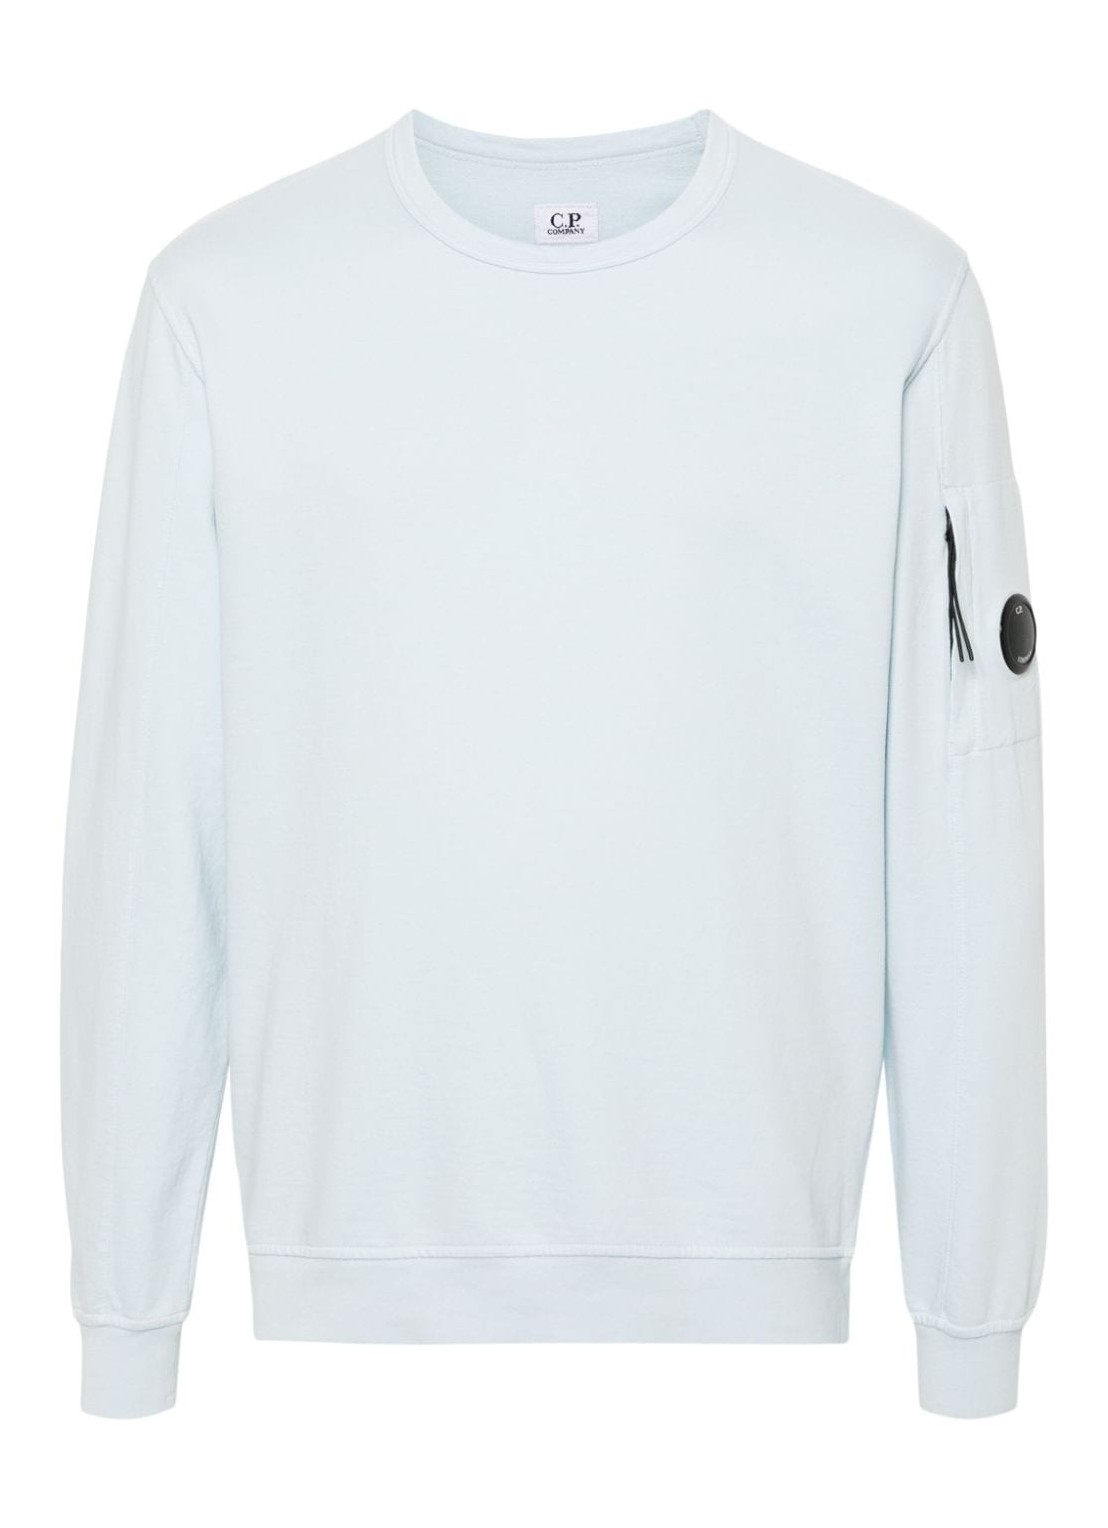 Sudadera c.p.company sweater man light fleece sweatshirt 16cmss032a002246g 806 talla Azul
 